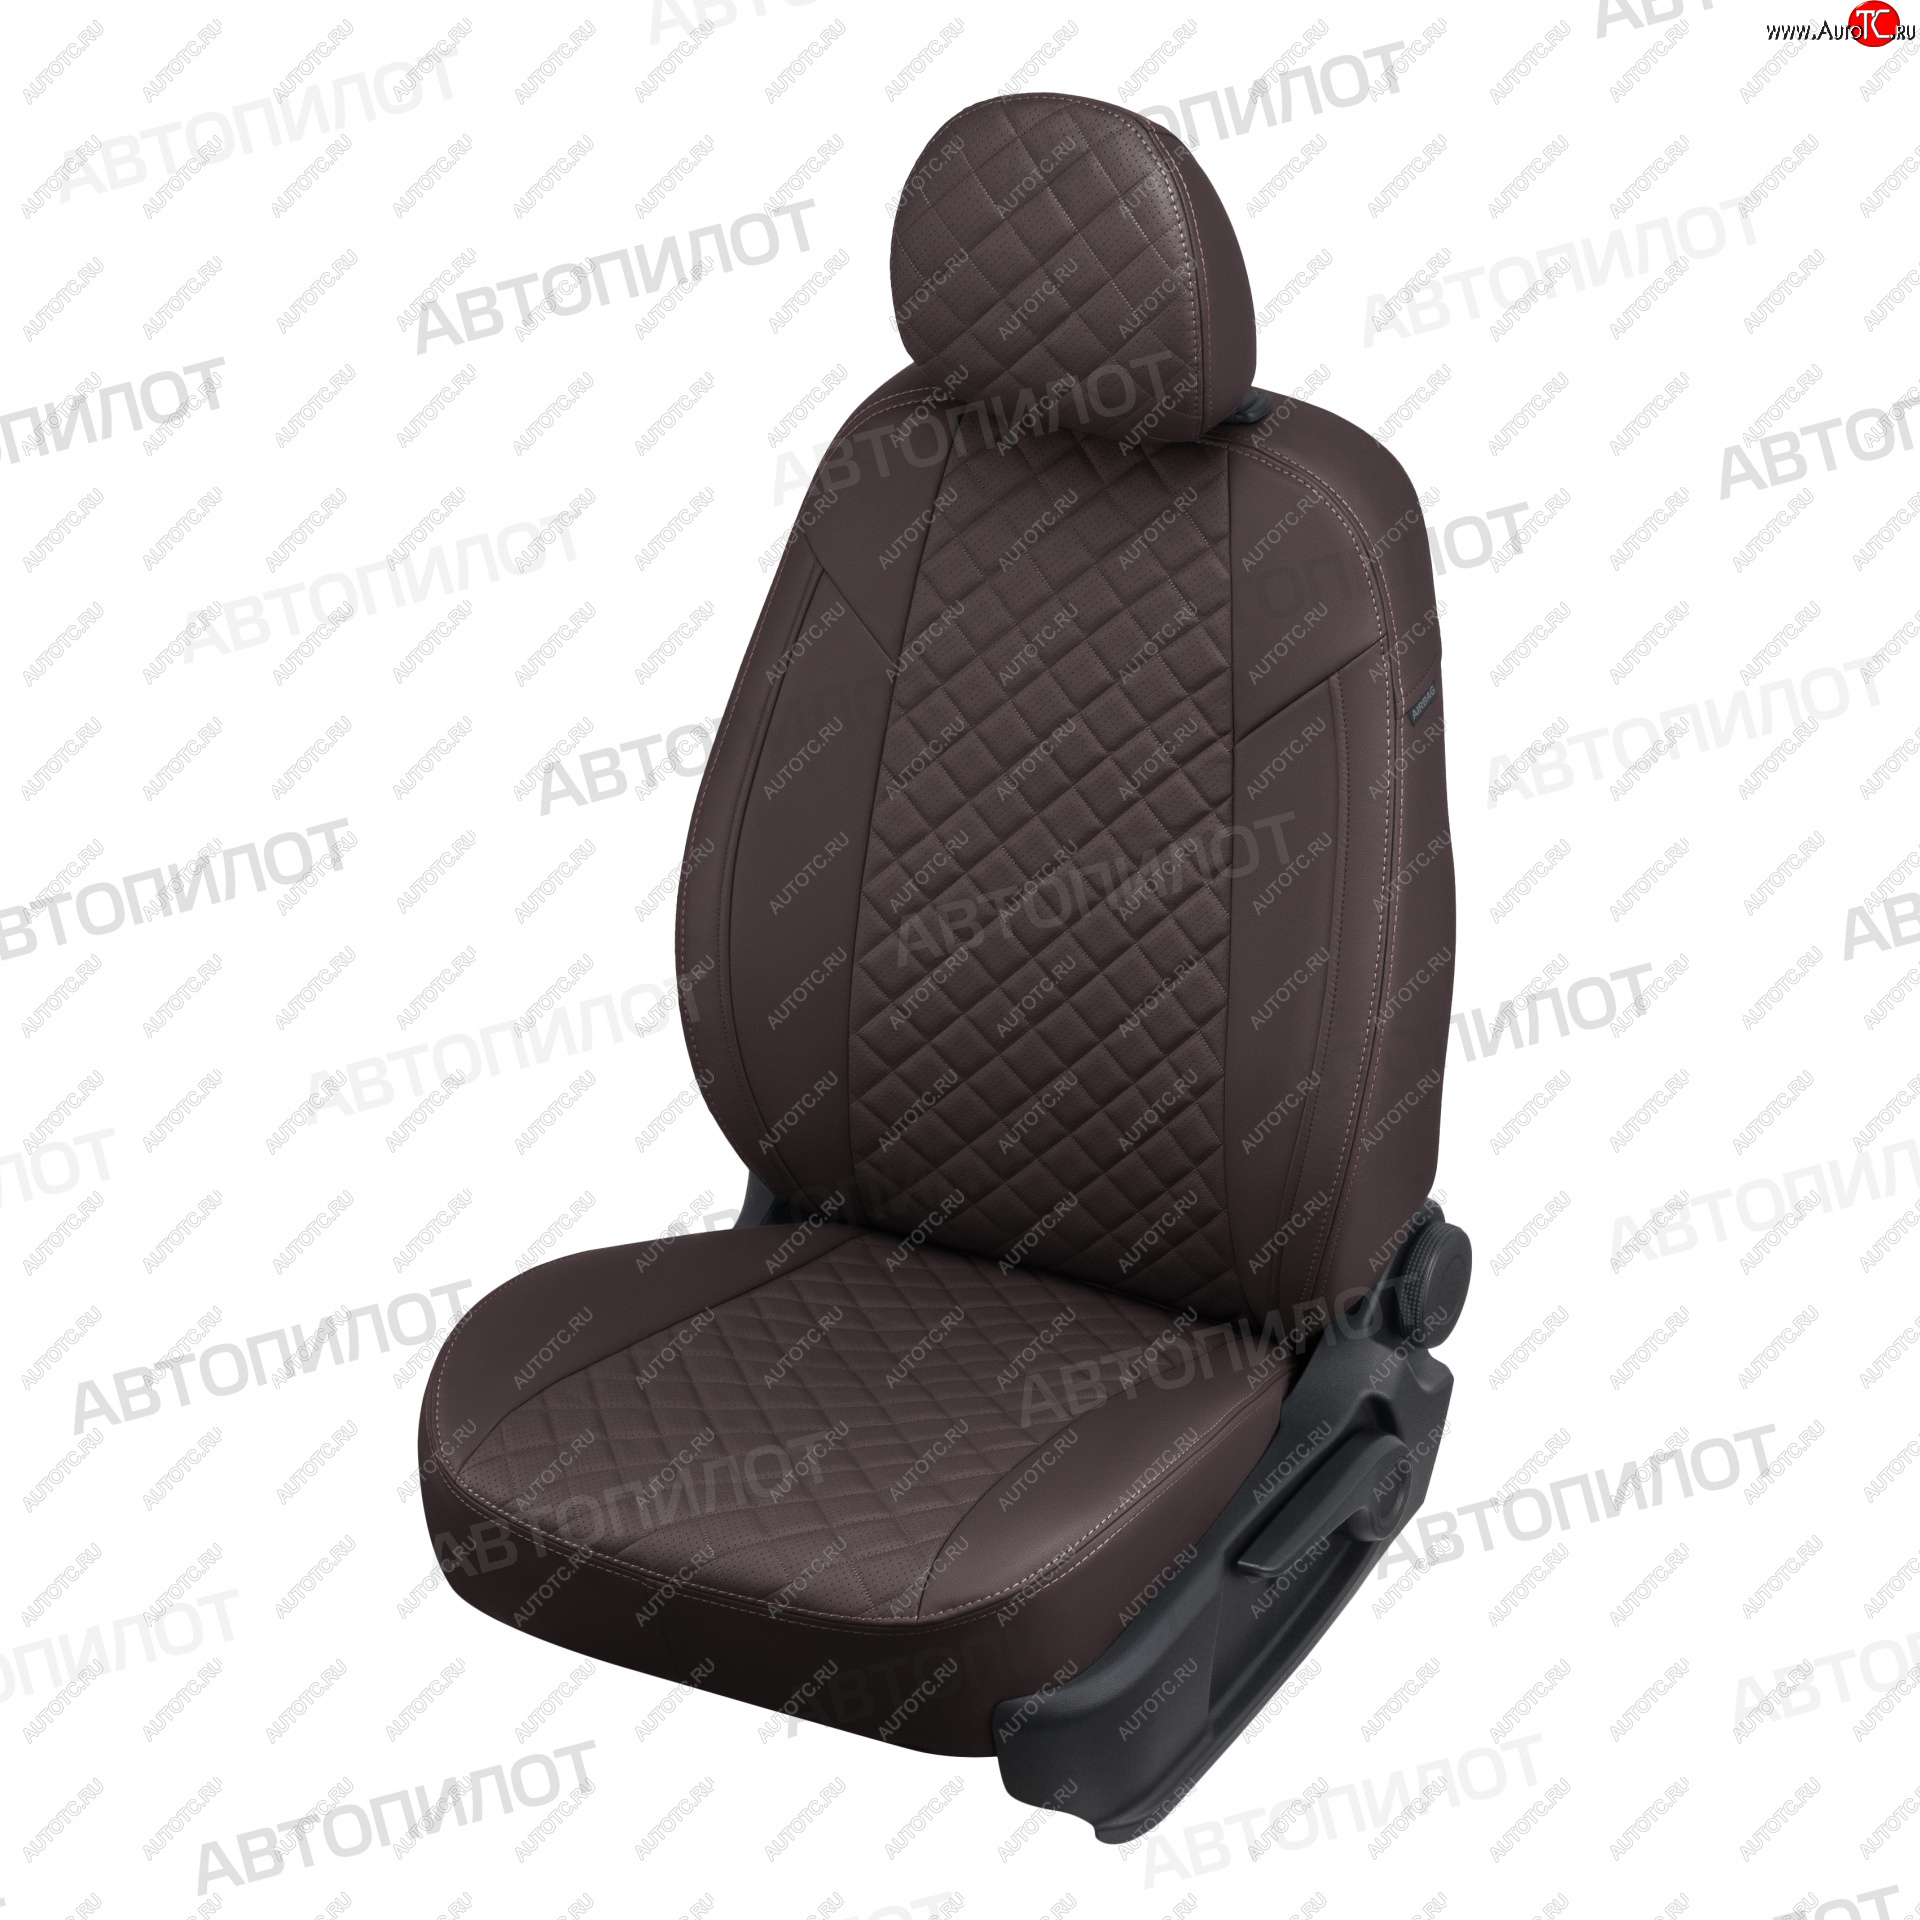 7 599 р. Чехлы сидений (экокожа) Автопилот Ромб  Hyundai Solaris ( 1 хэтчбек,  1 хэтчбэк) (2010-2017), KIA Rio  3 QB (2011-2017) (шоколад)